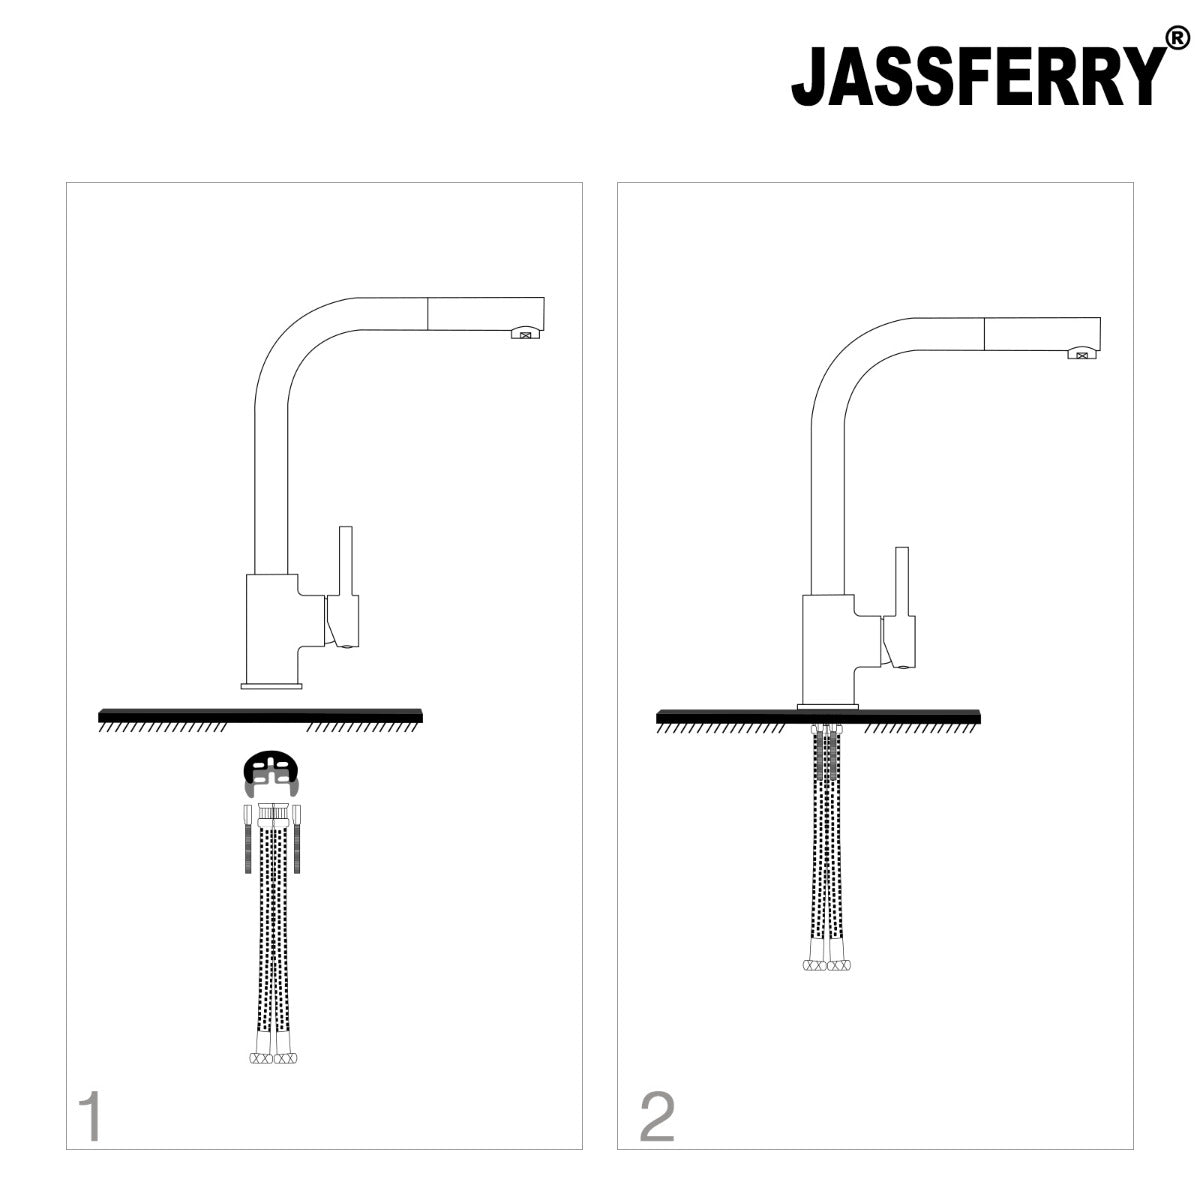 JassferryJASSFERRY Modern Kitchen Mixer Tap L-Style Swivel Spout Sink Faucet Single LeverKitchen taps